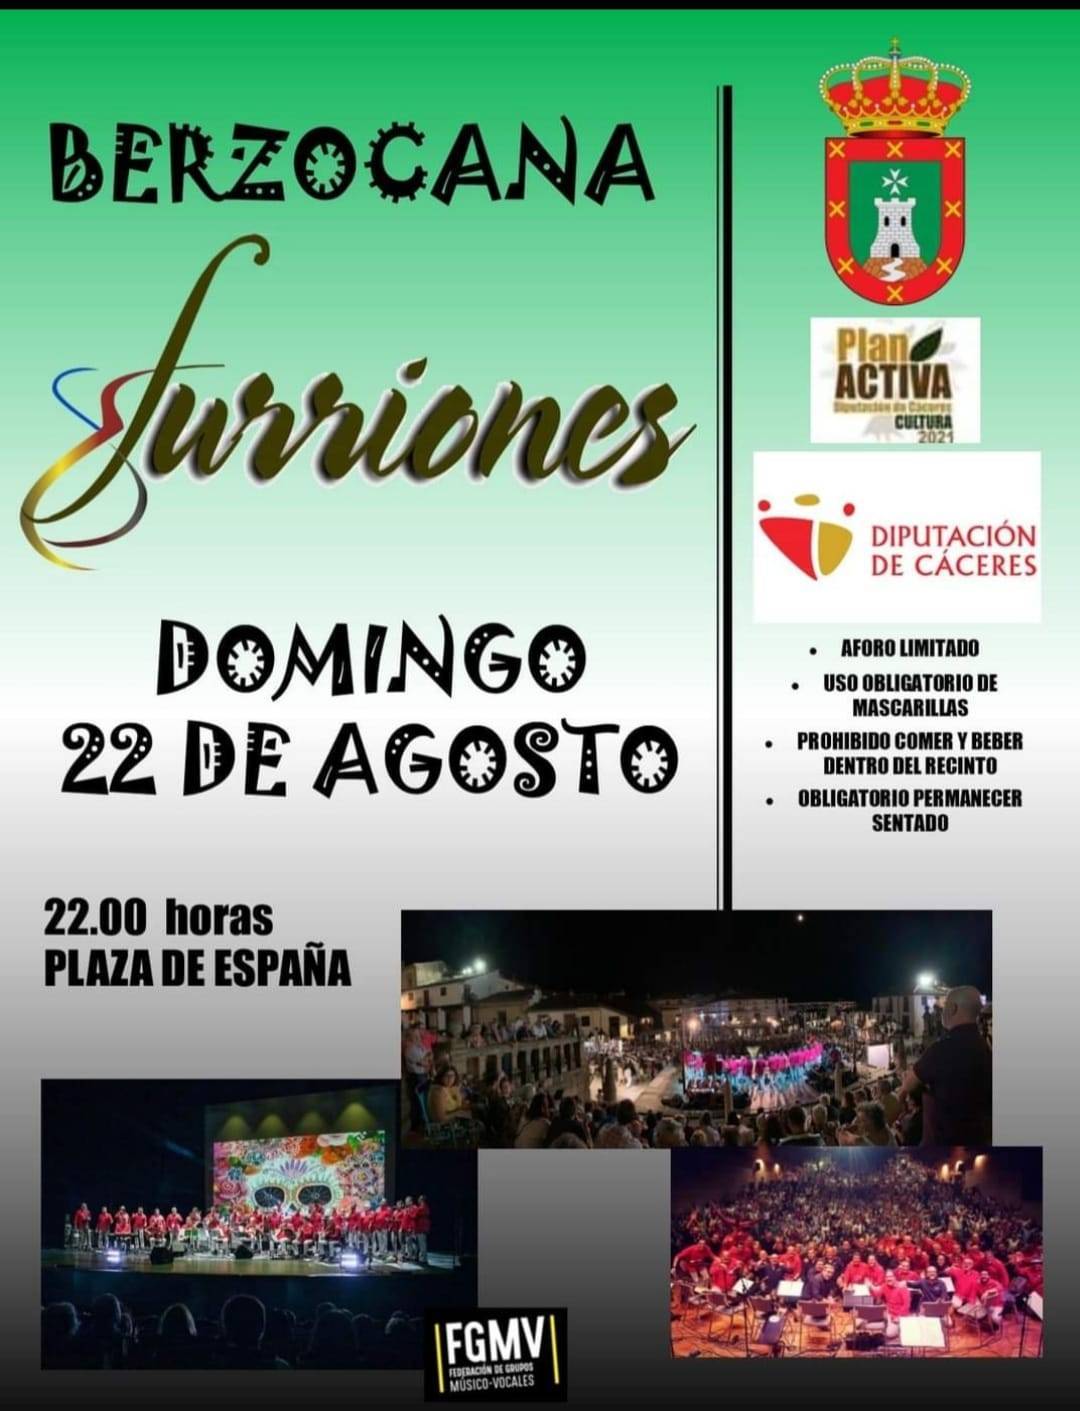 Furriones (2021) - Berzocana (Cáceres)